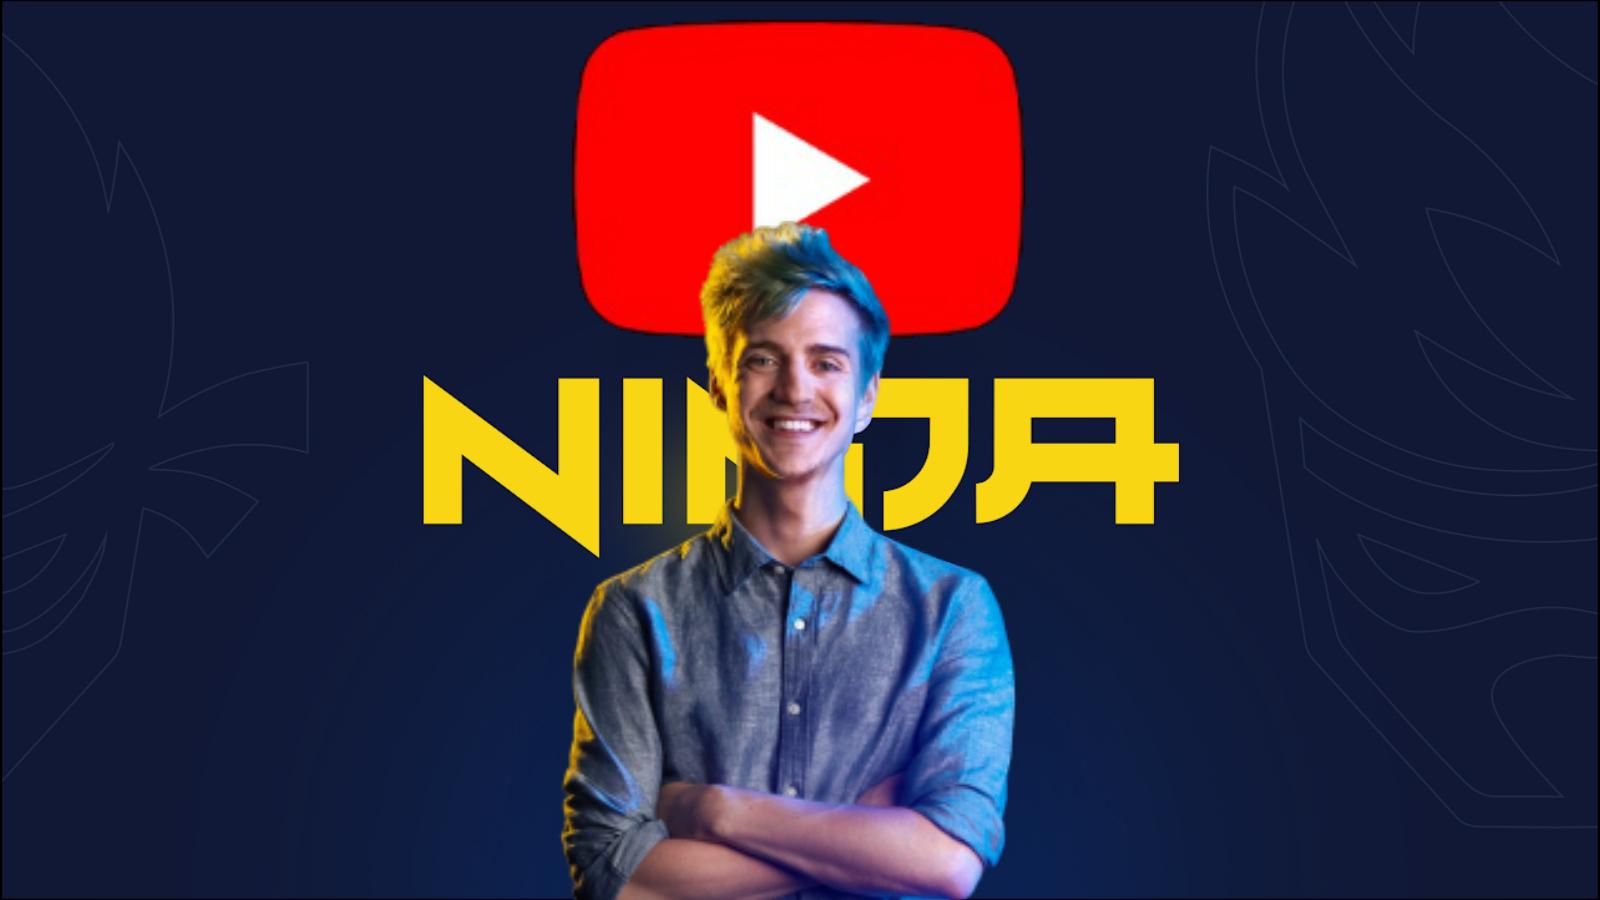 Ninja with the YouTube logo